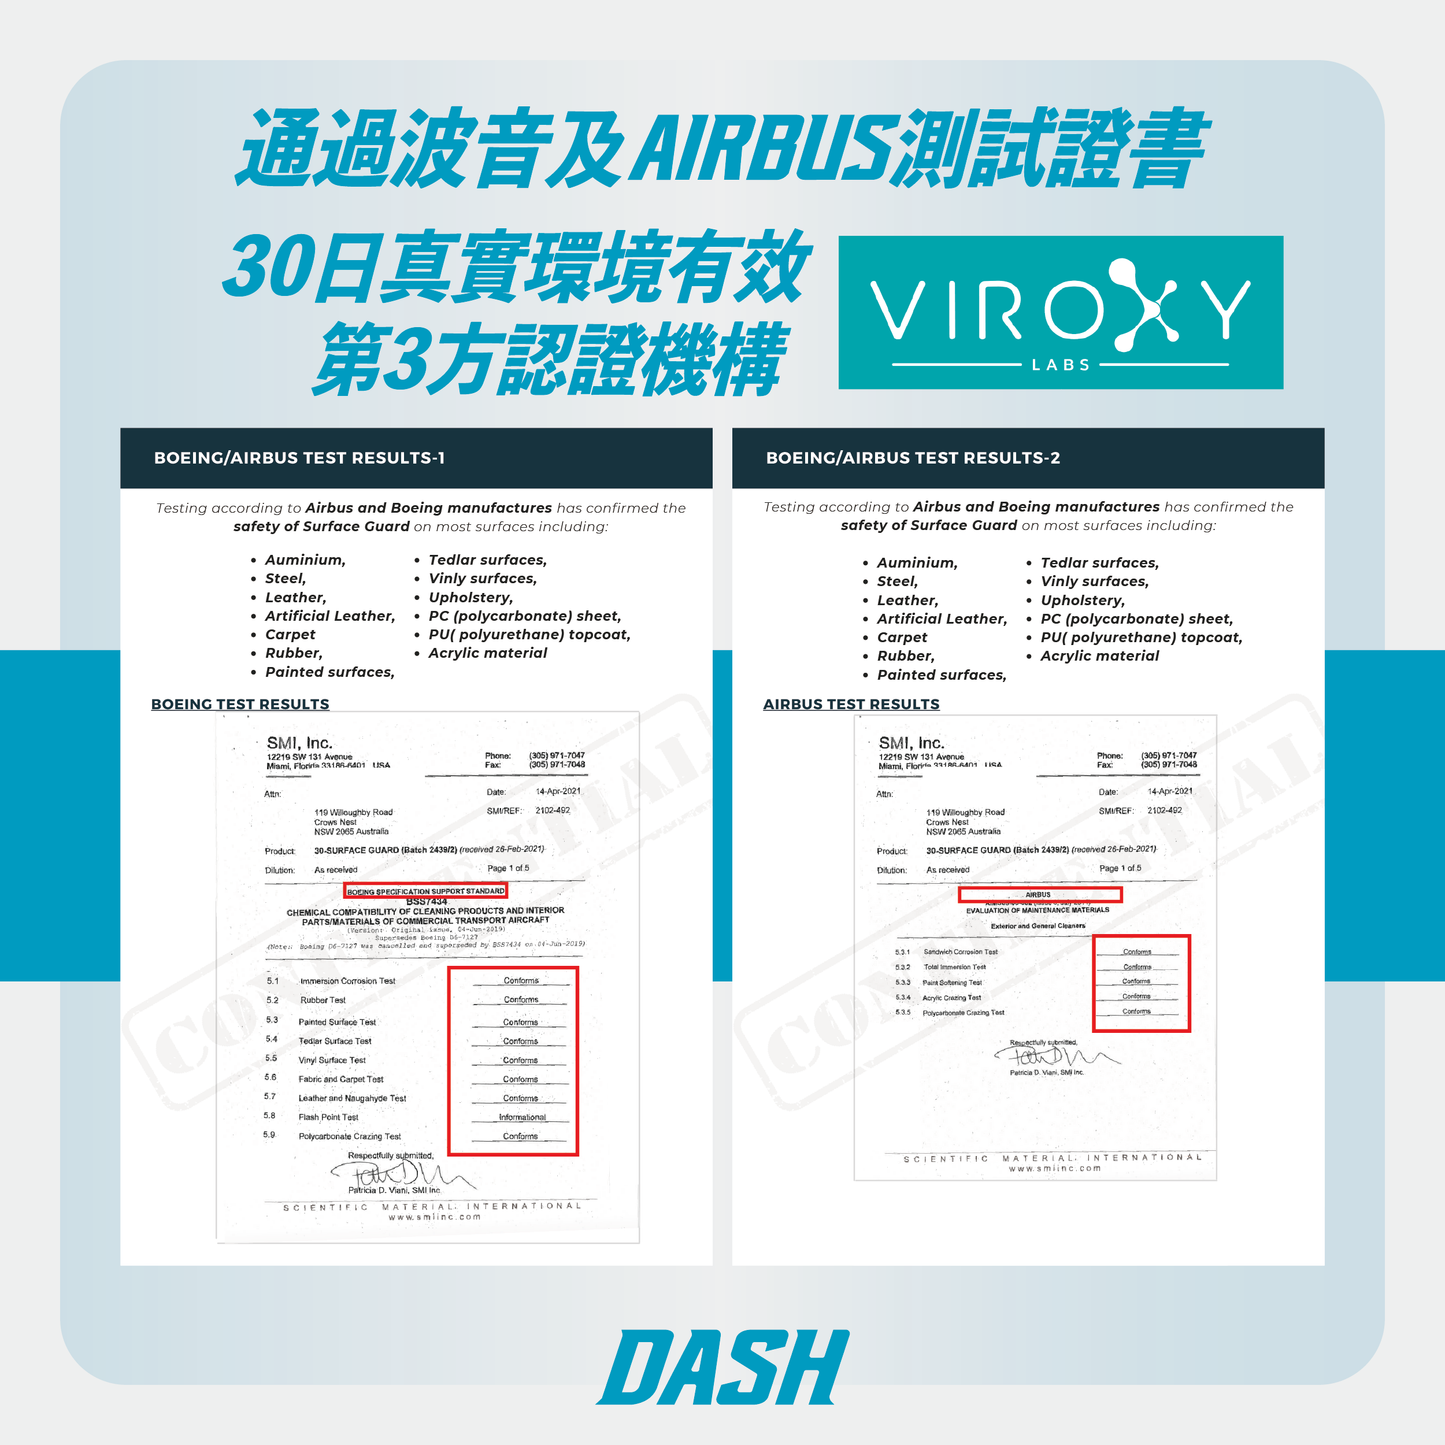 DASH-30 防護醫院級抗菌塗層消毒劑 （500ml）